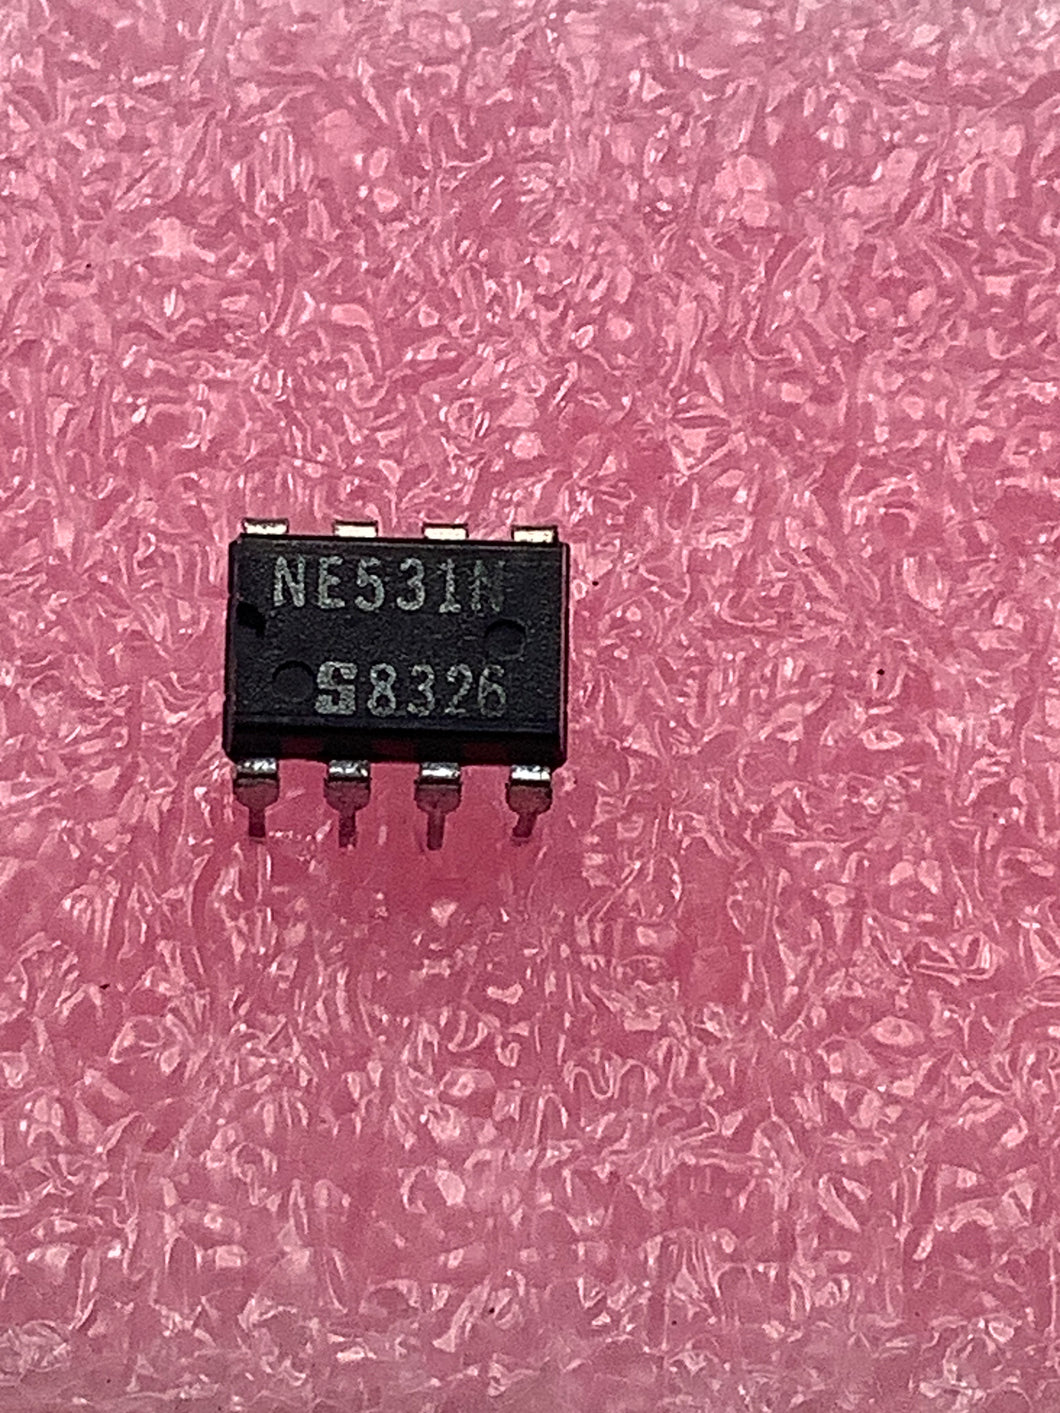 NE531N - SIGNETICS - High slew rate operational amplifier.